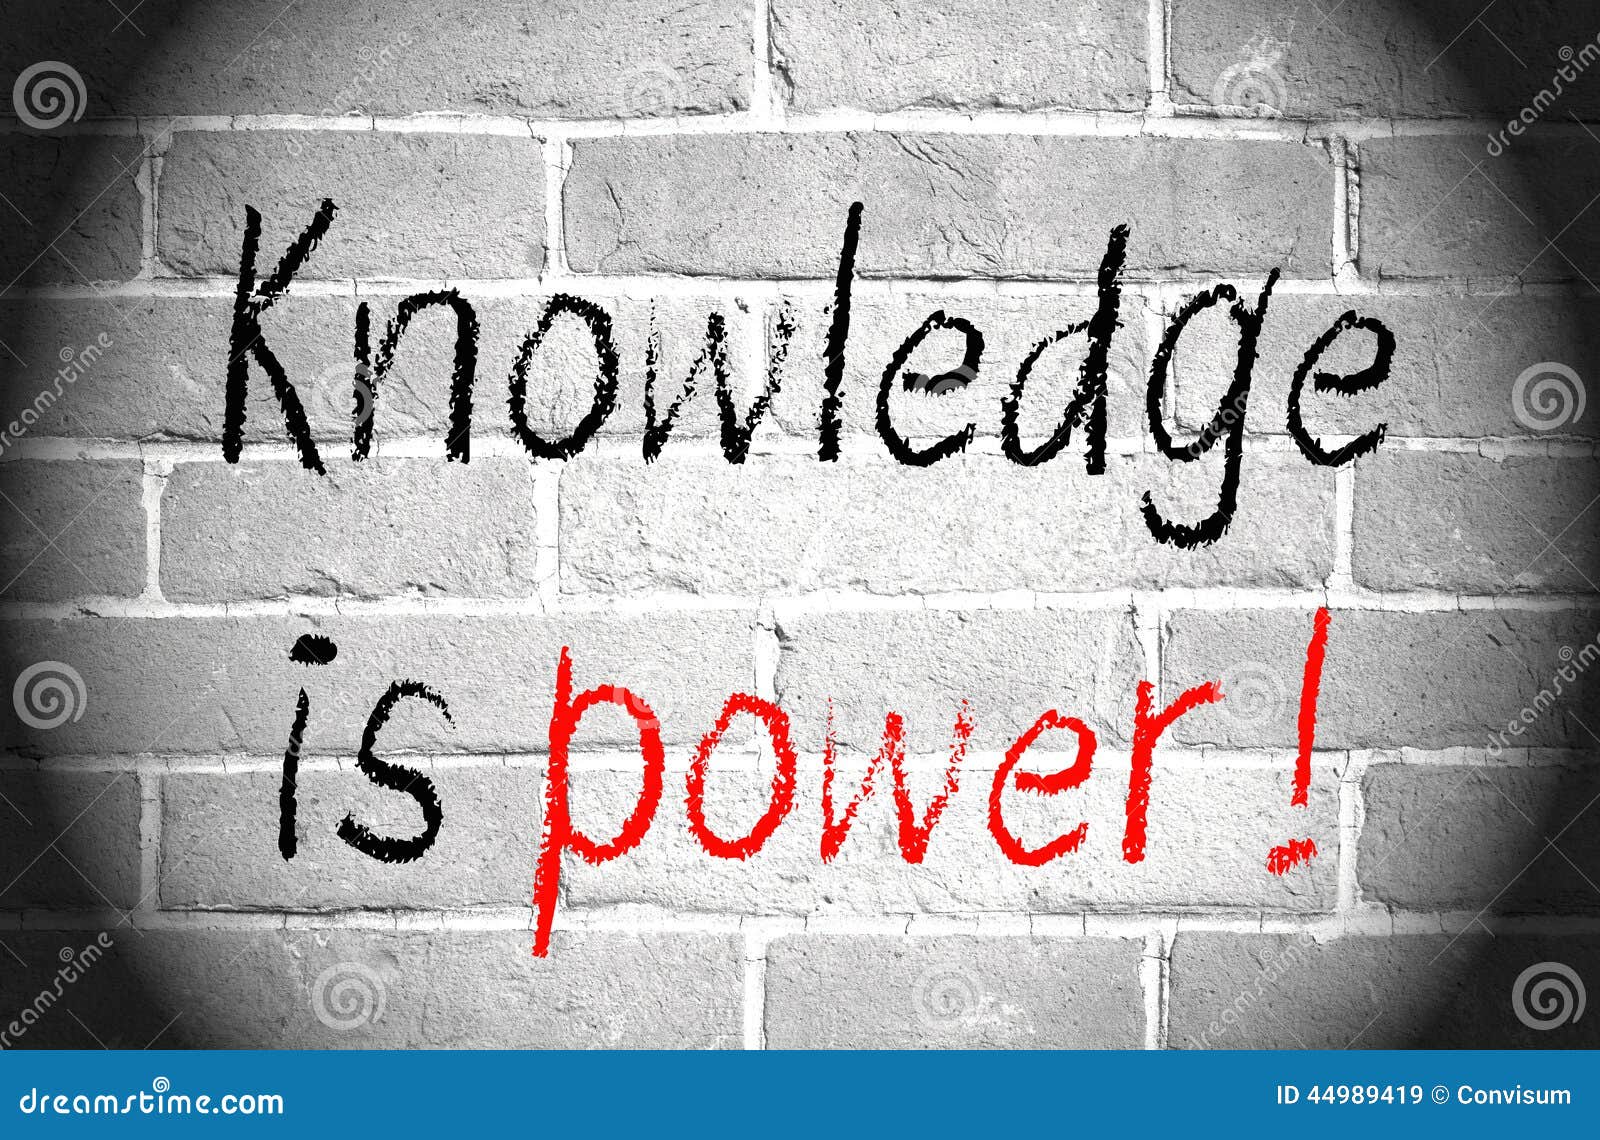 knowledge is power monochrome